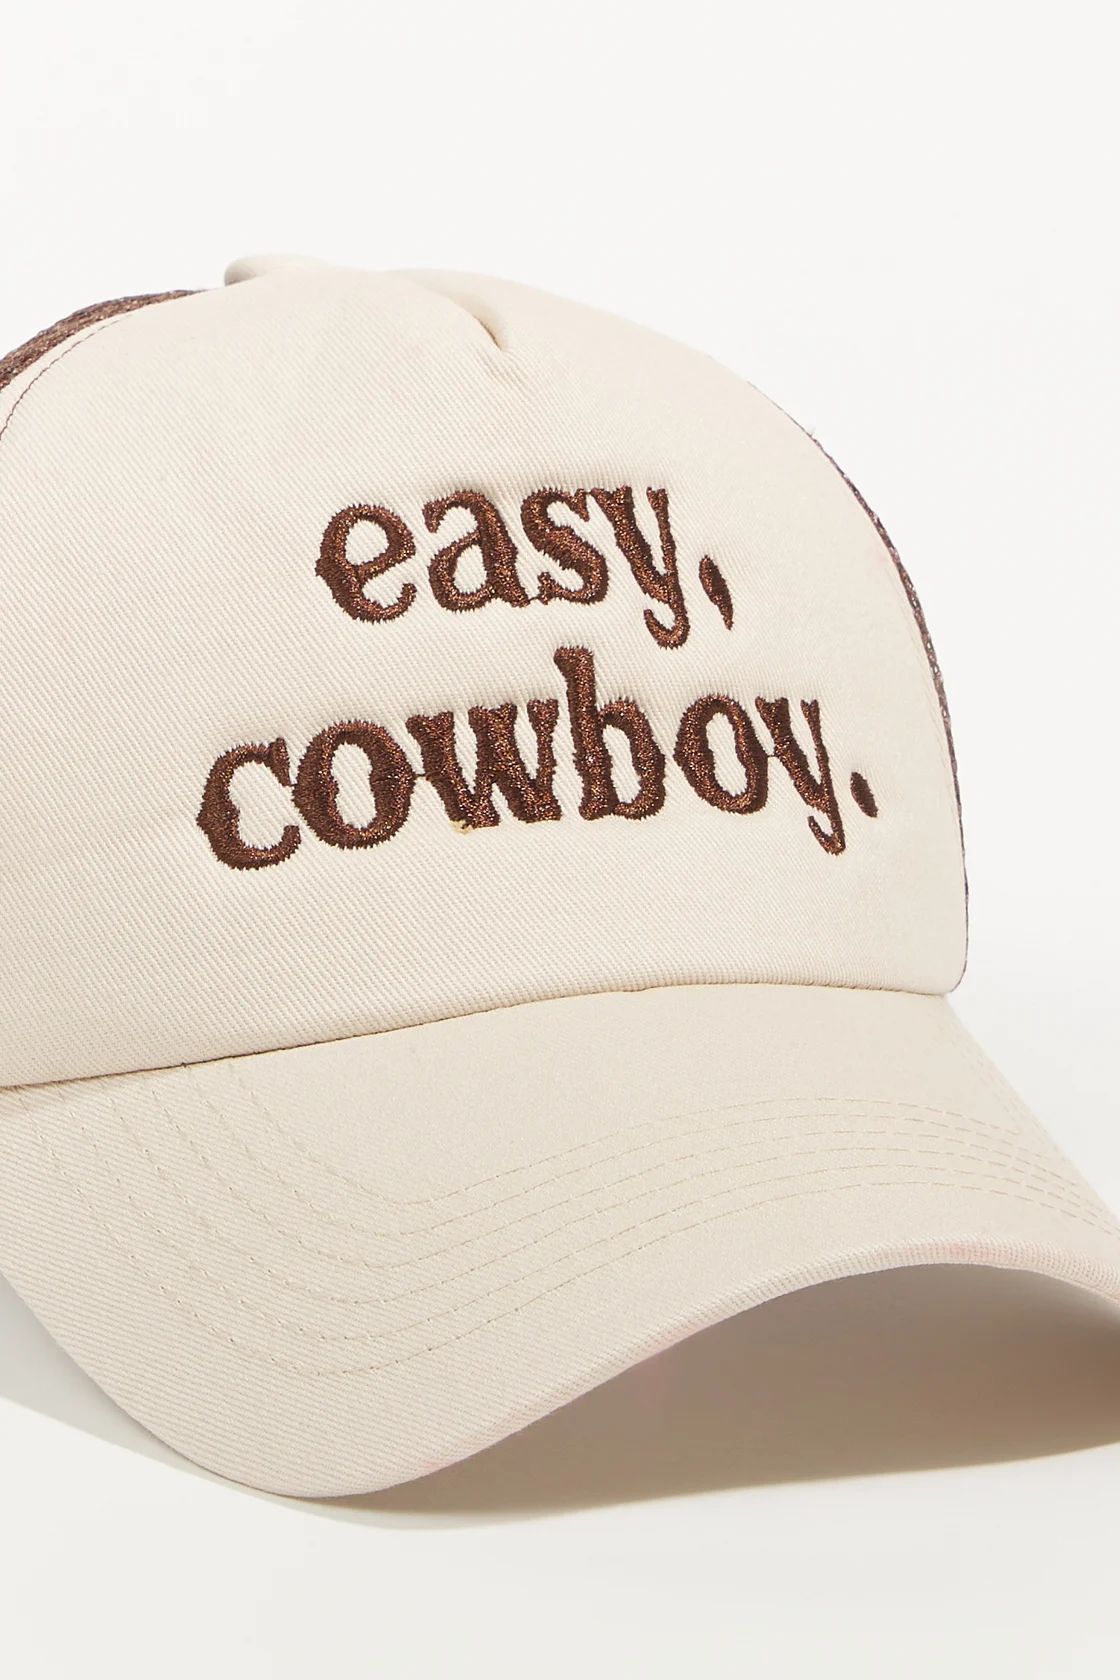 Easy Cowboy Trucker Hat | Altar'd State